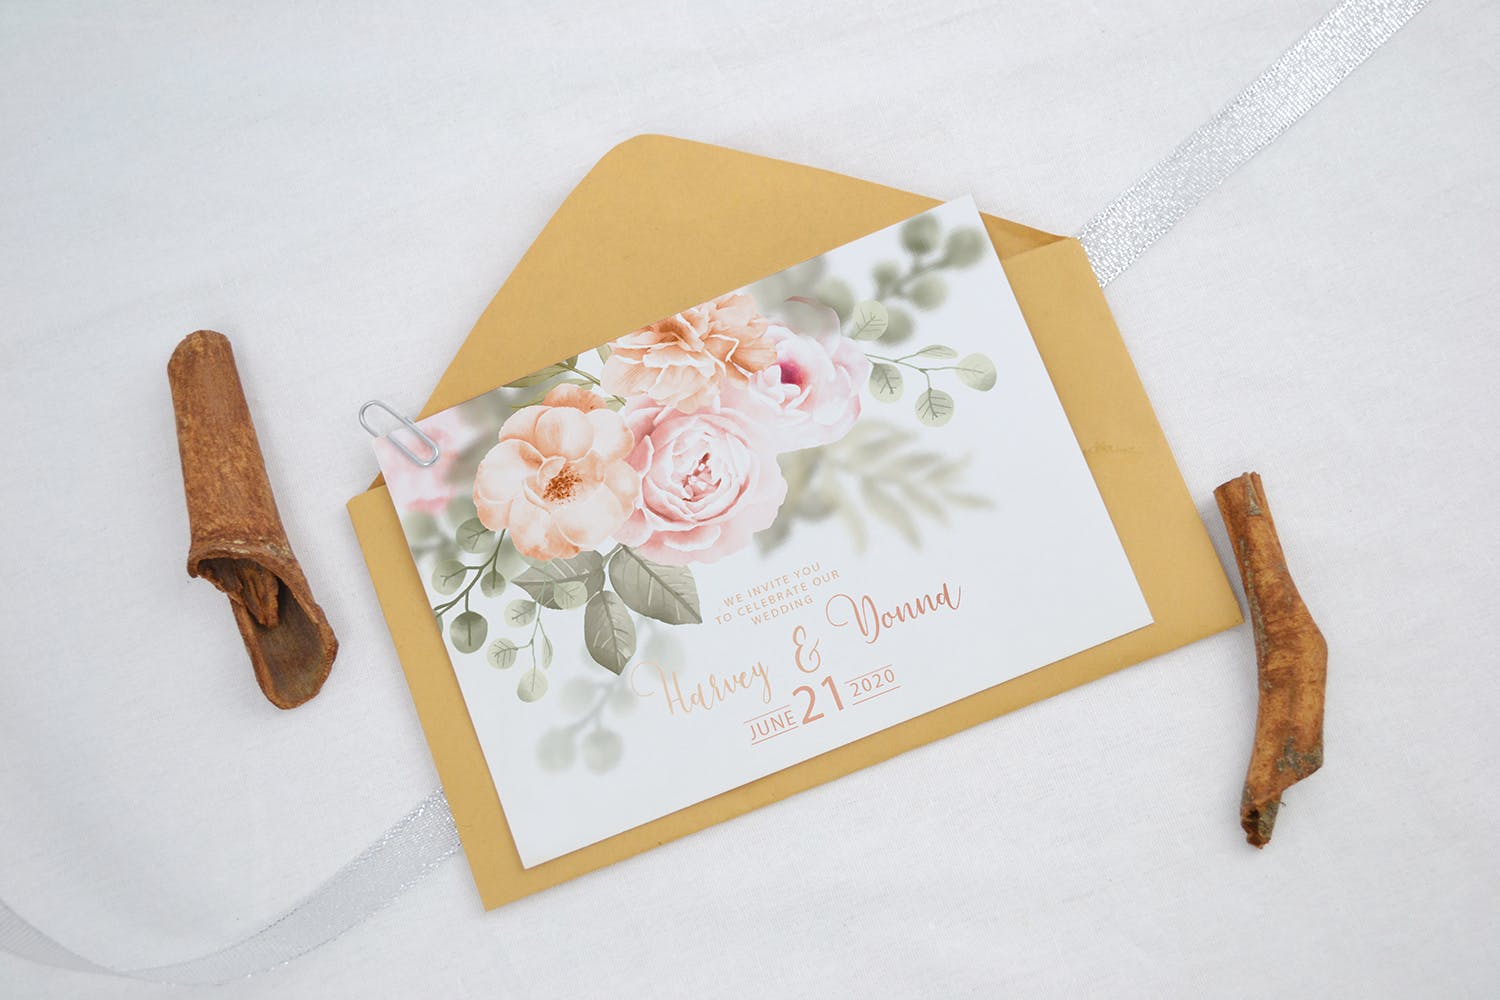 婚礼邀请函设计效果图样机第一素材精选模板v2 Realistic Wedding Invitation Card Mockup V2插图(3)